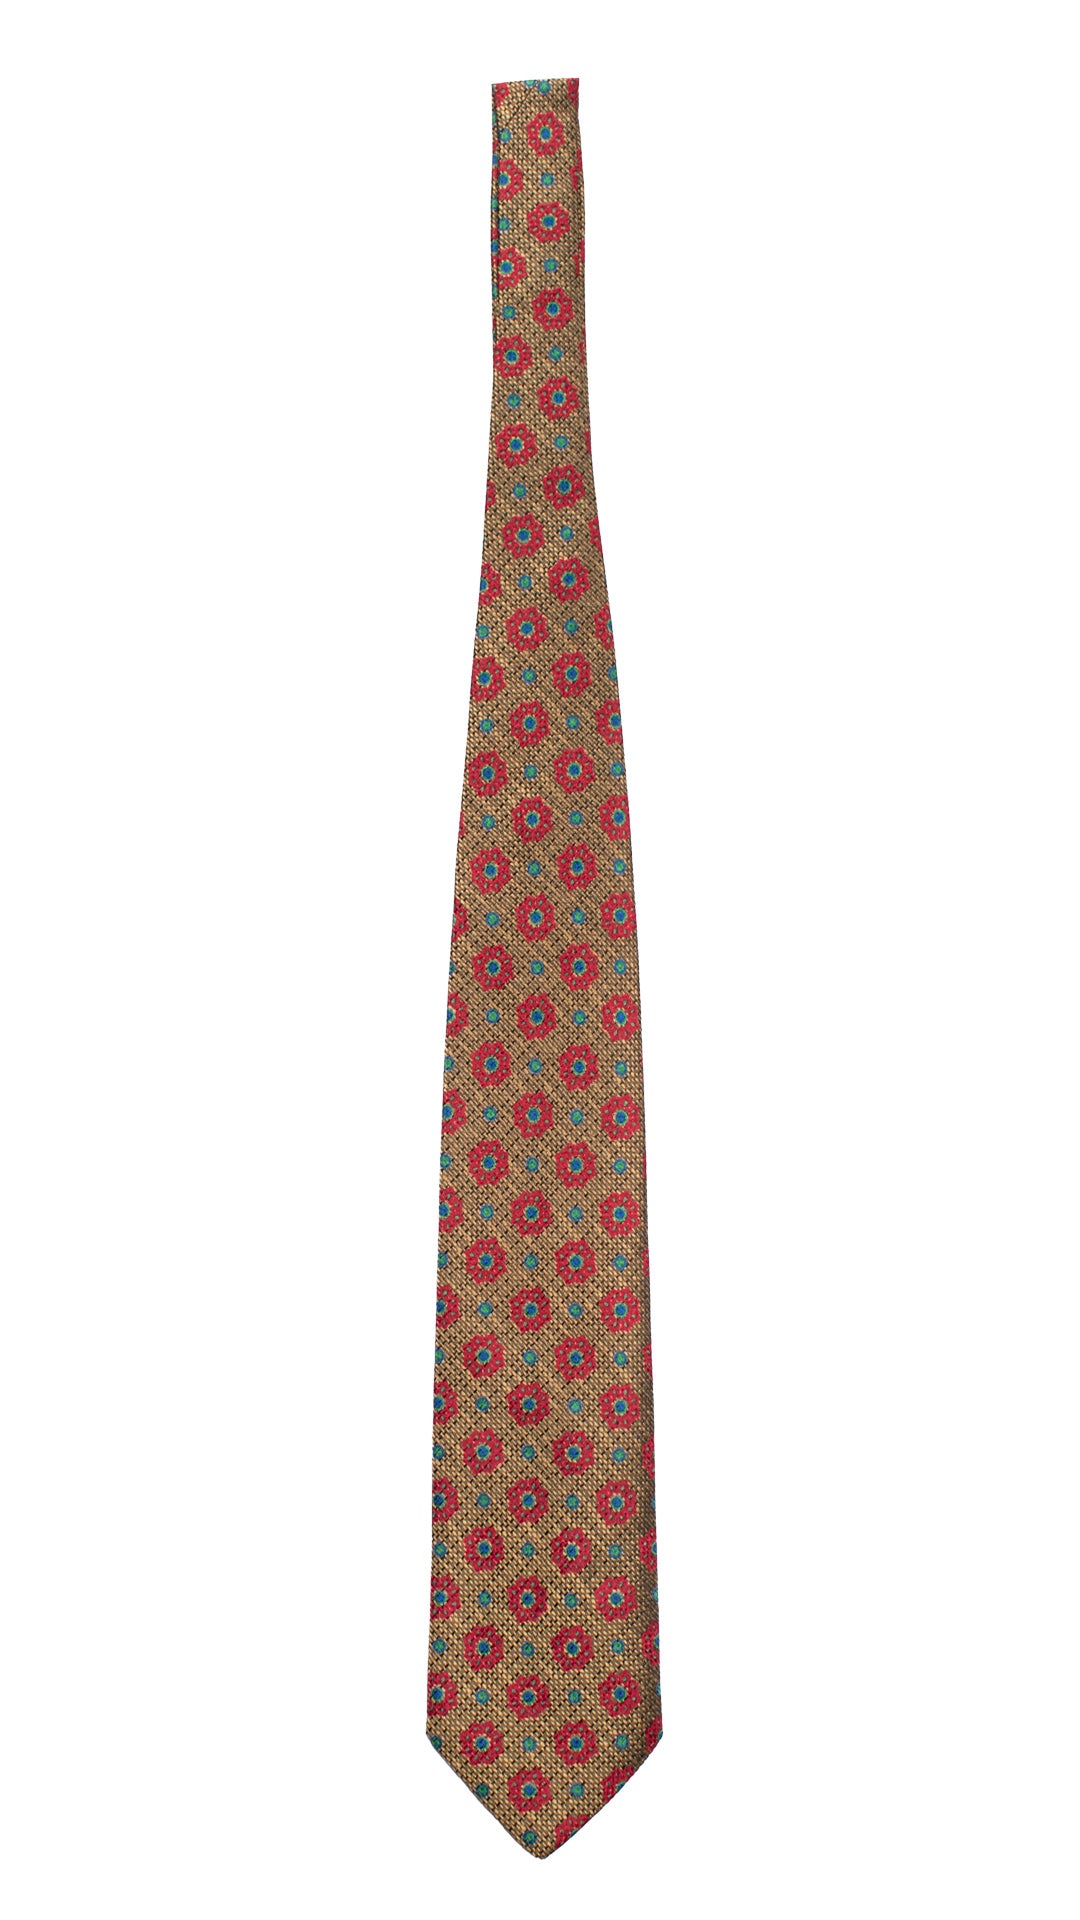 Cravatta Vintage di Seta Jacquard Giallo Oro Fantasia Magenta Blu Verde CV808 Intera